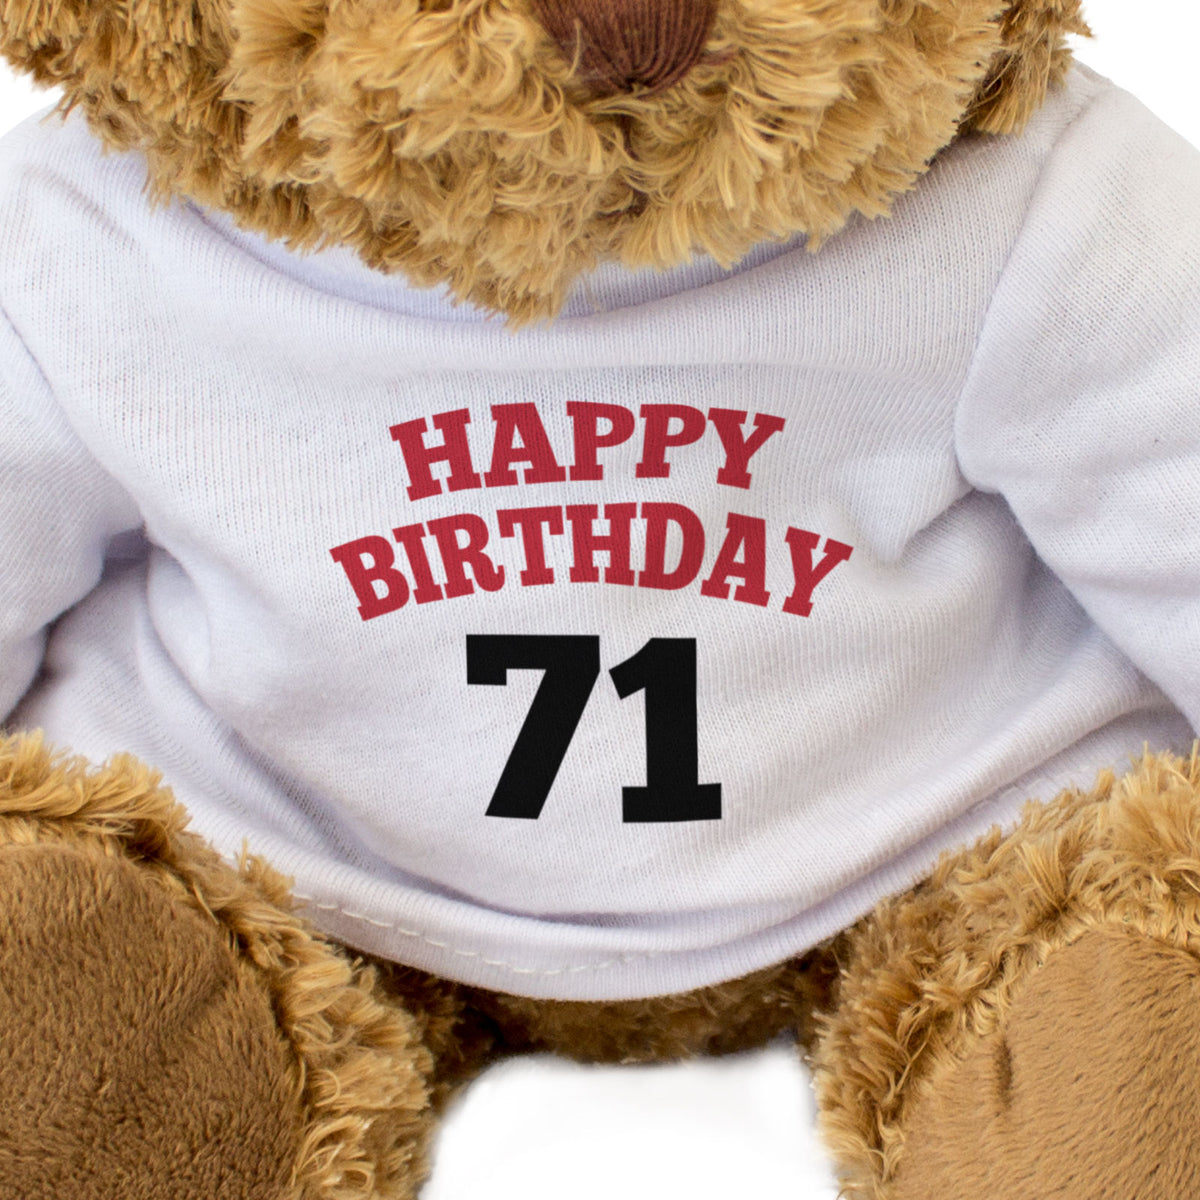 Happy Birthday 71 - Teddy Bear